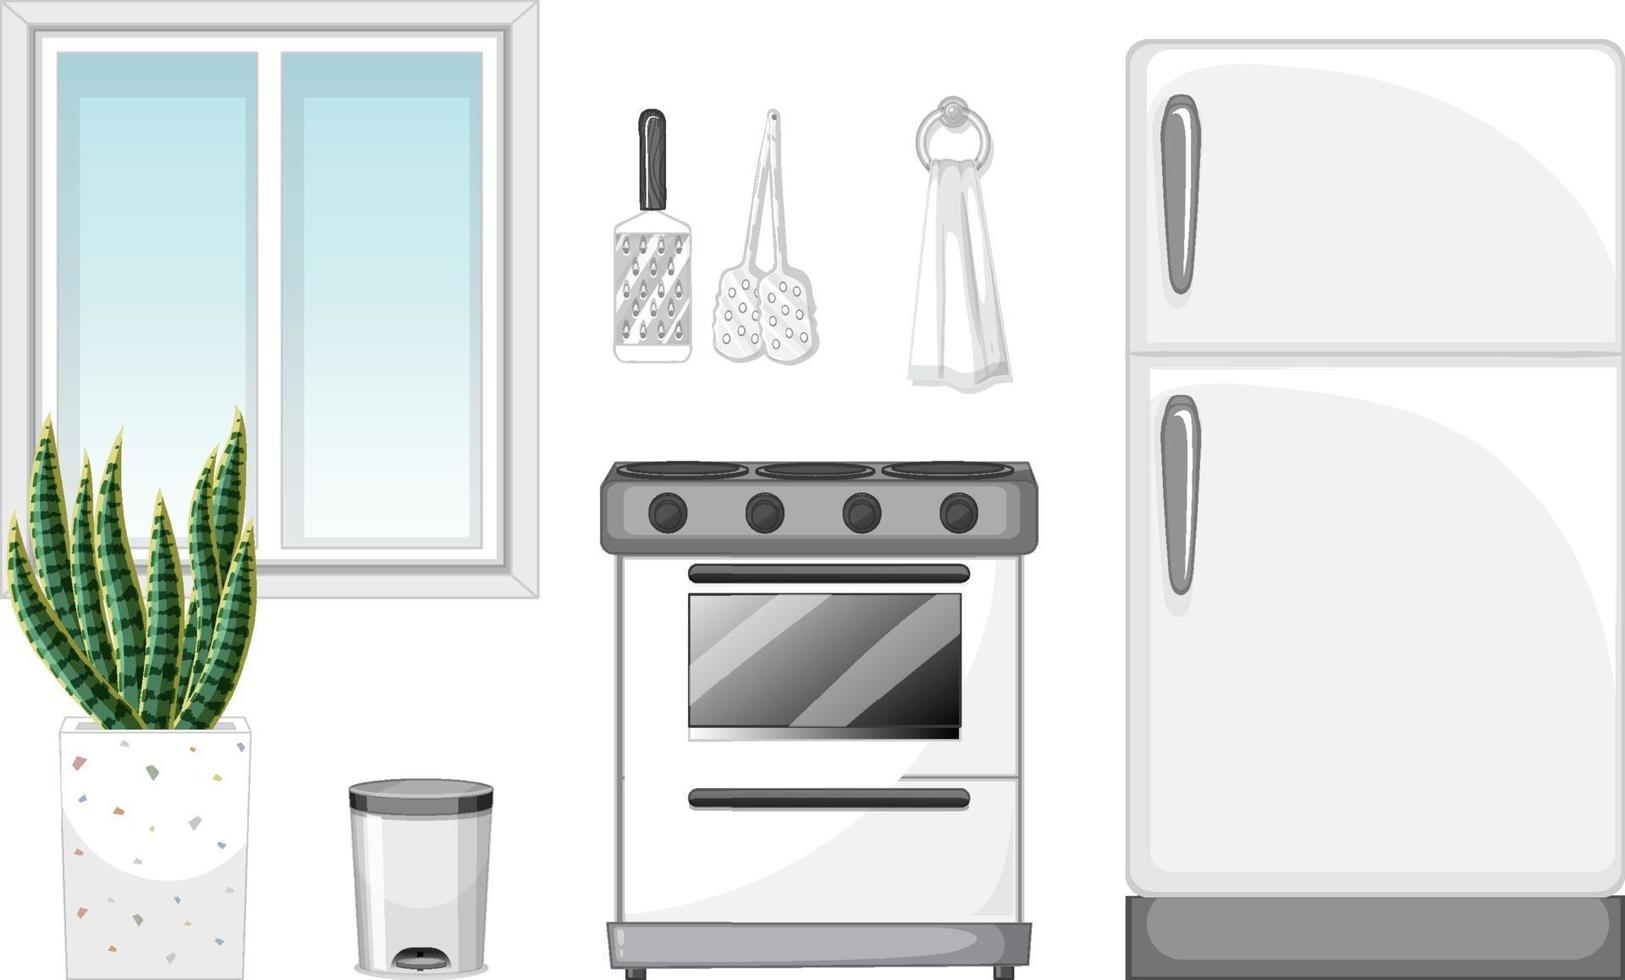 Kitchen furniture set for interior design on white background vector